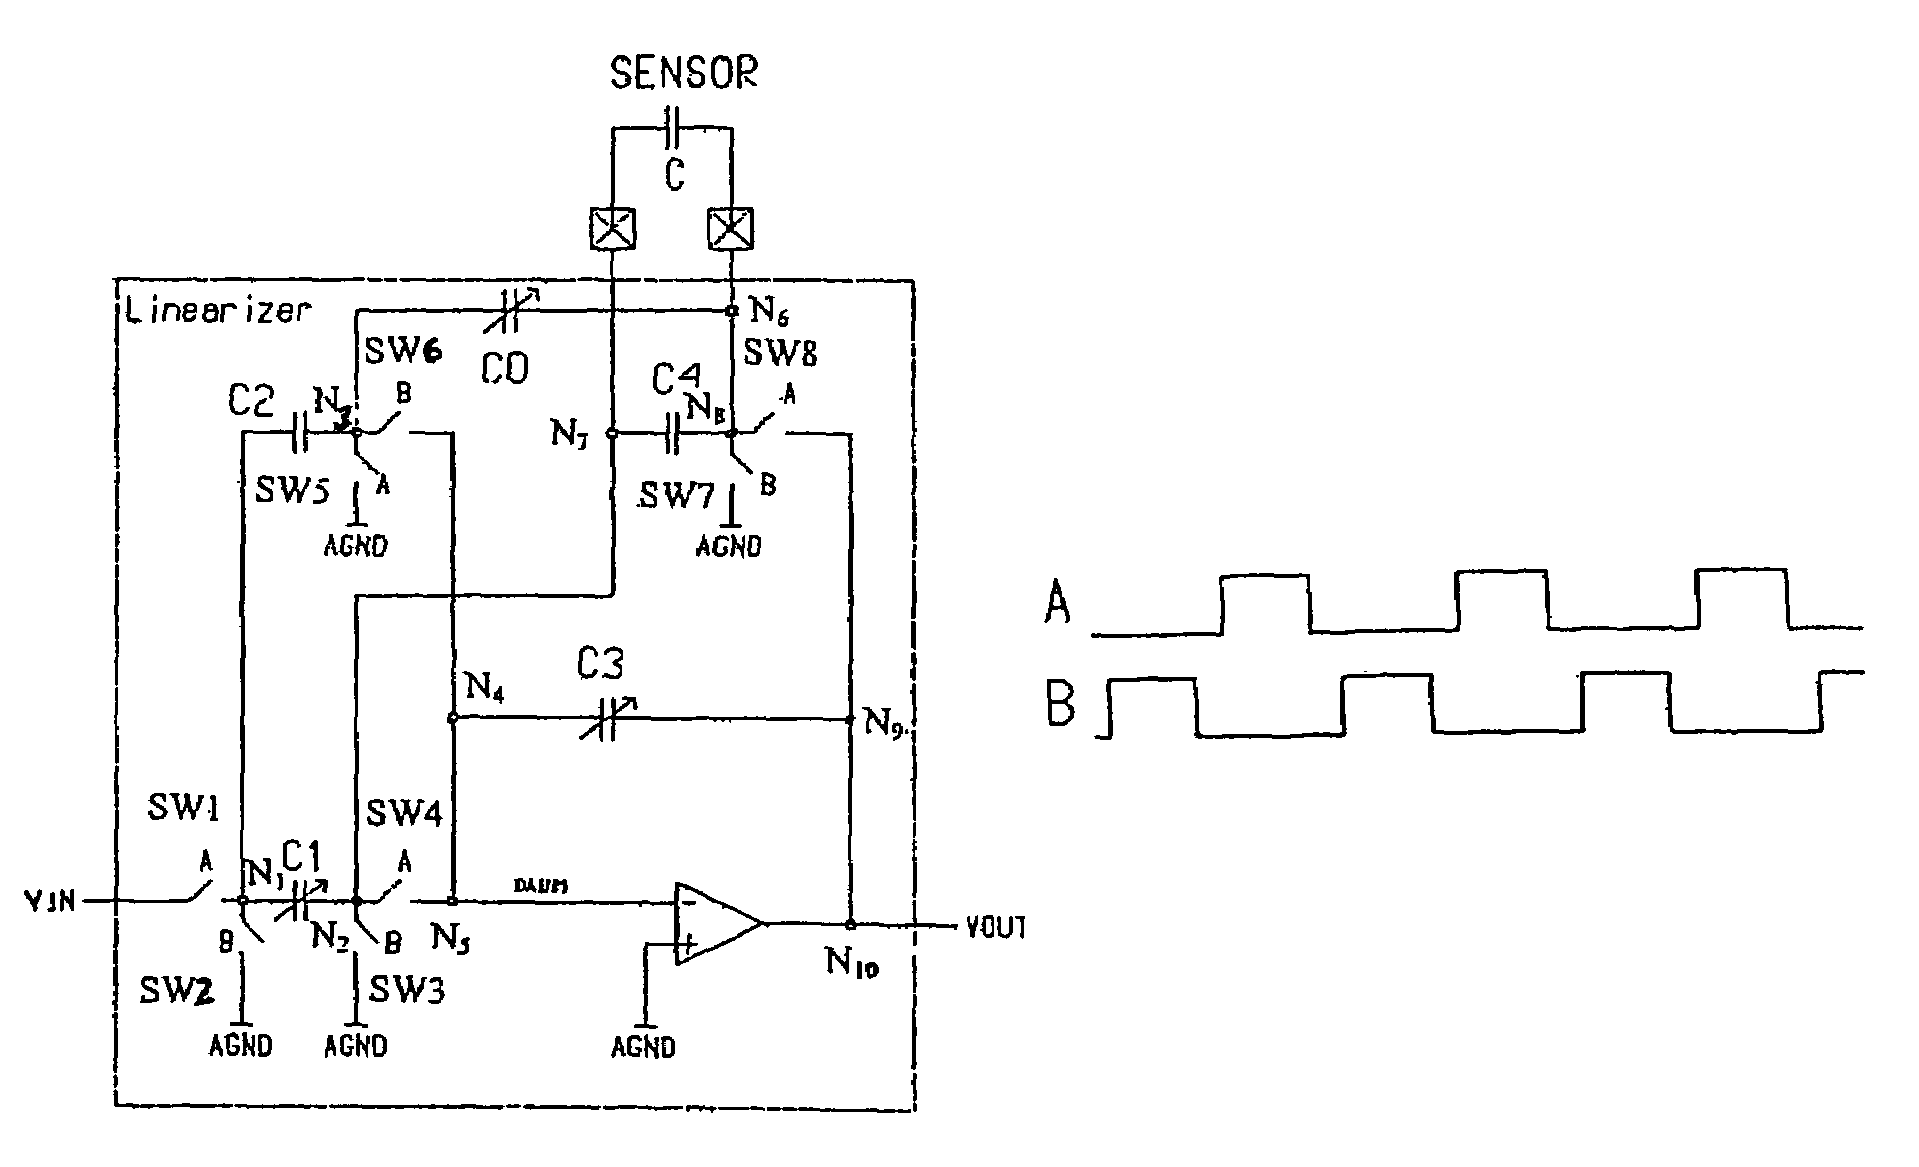 Linearizer circuit